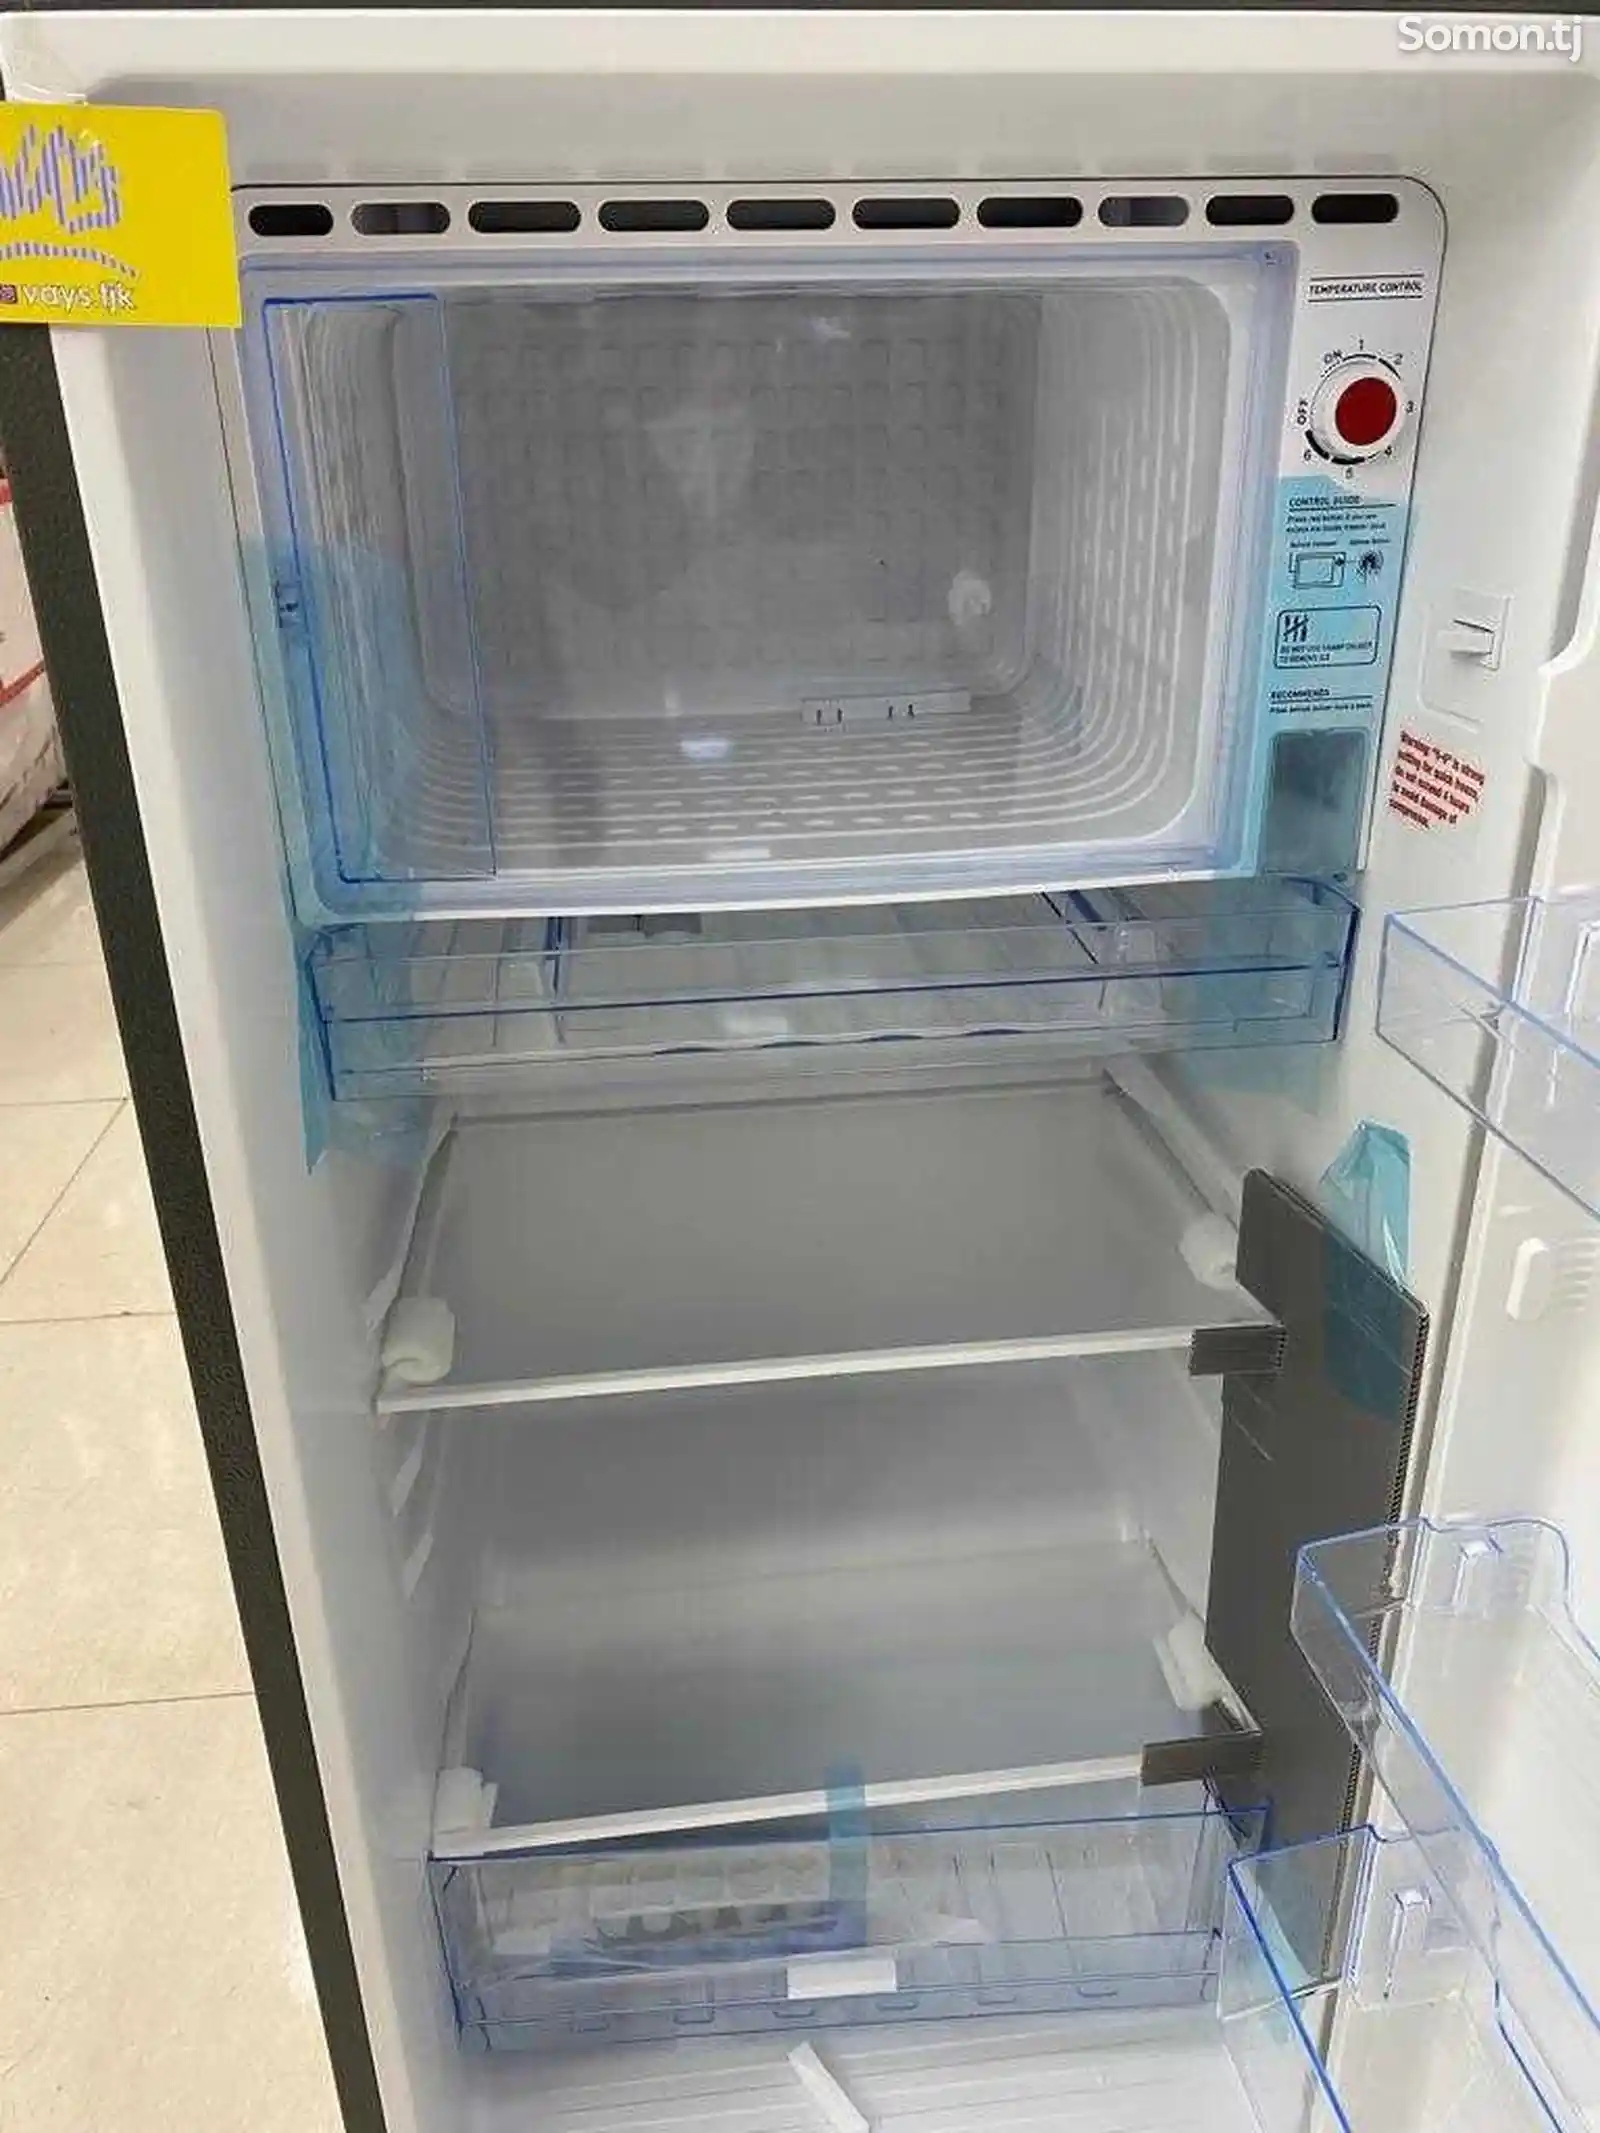 Холодильник Evro-4